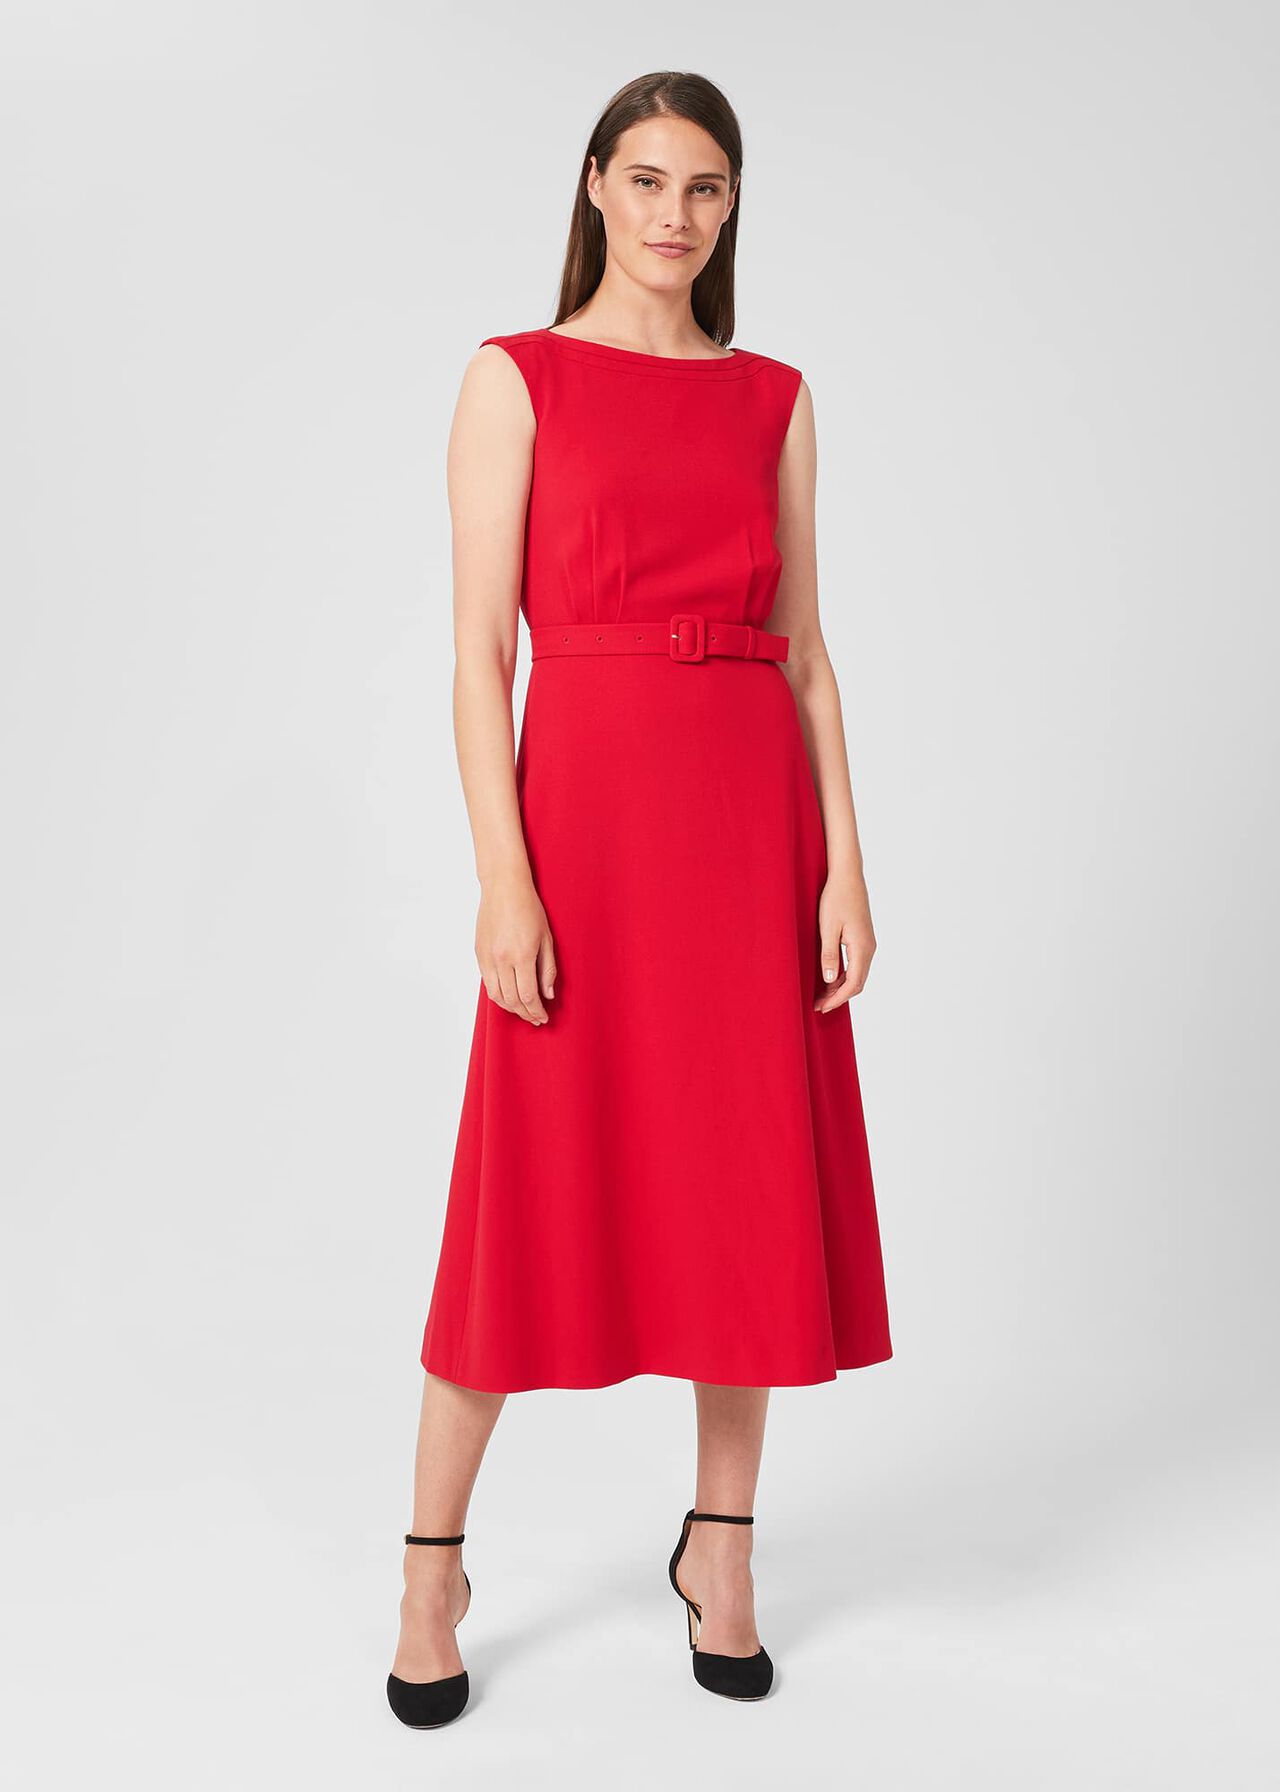 Eloise Crepe Midi Dress, Poppy Red, hi-res